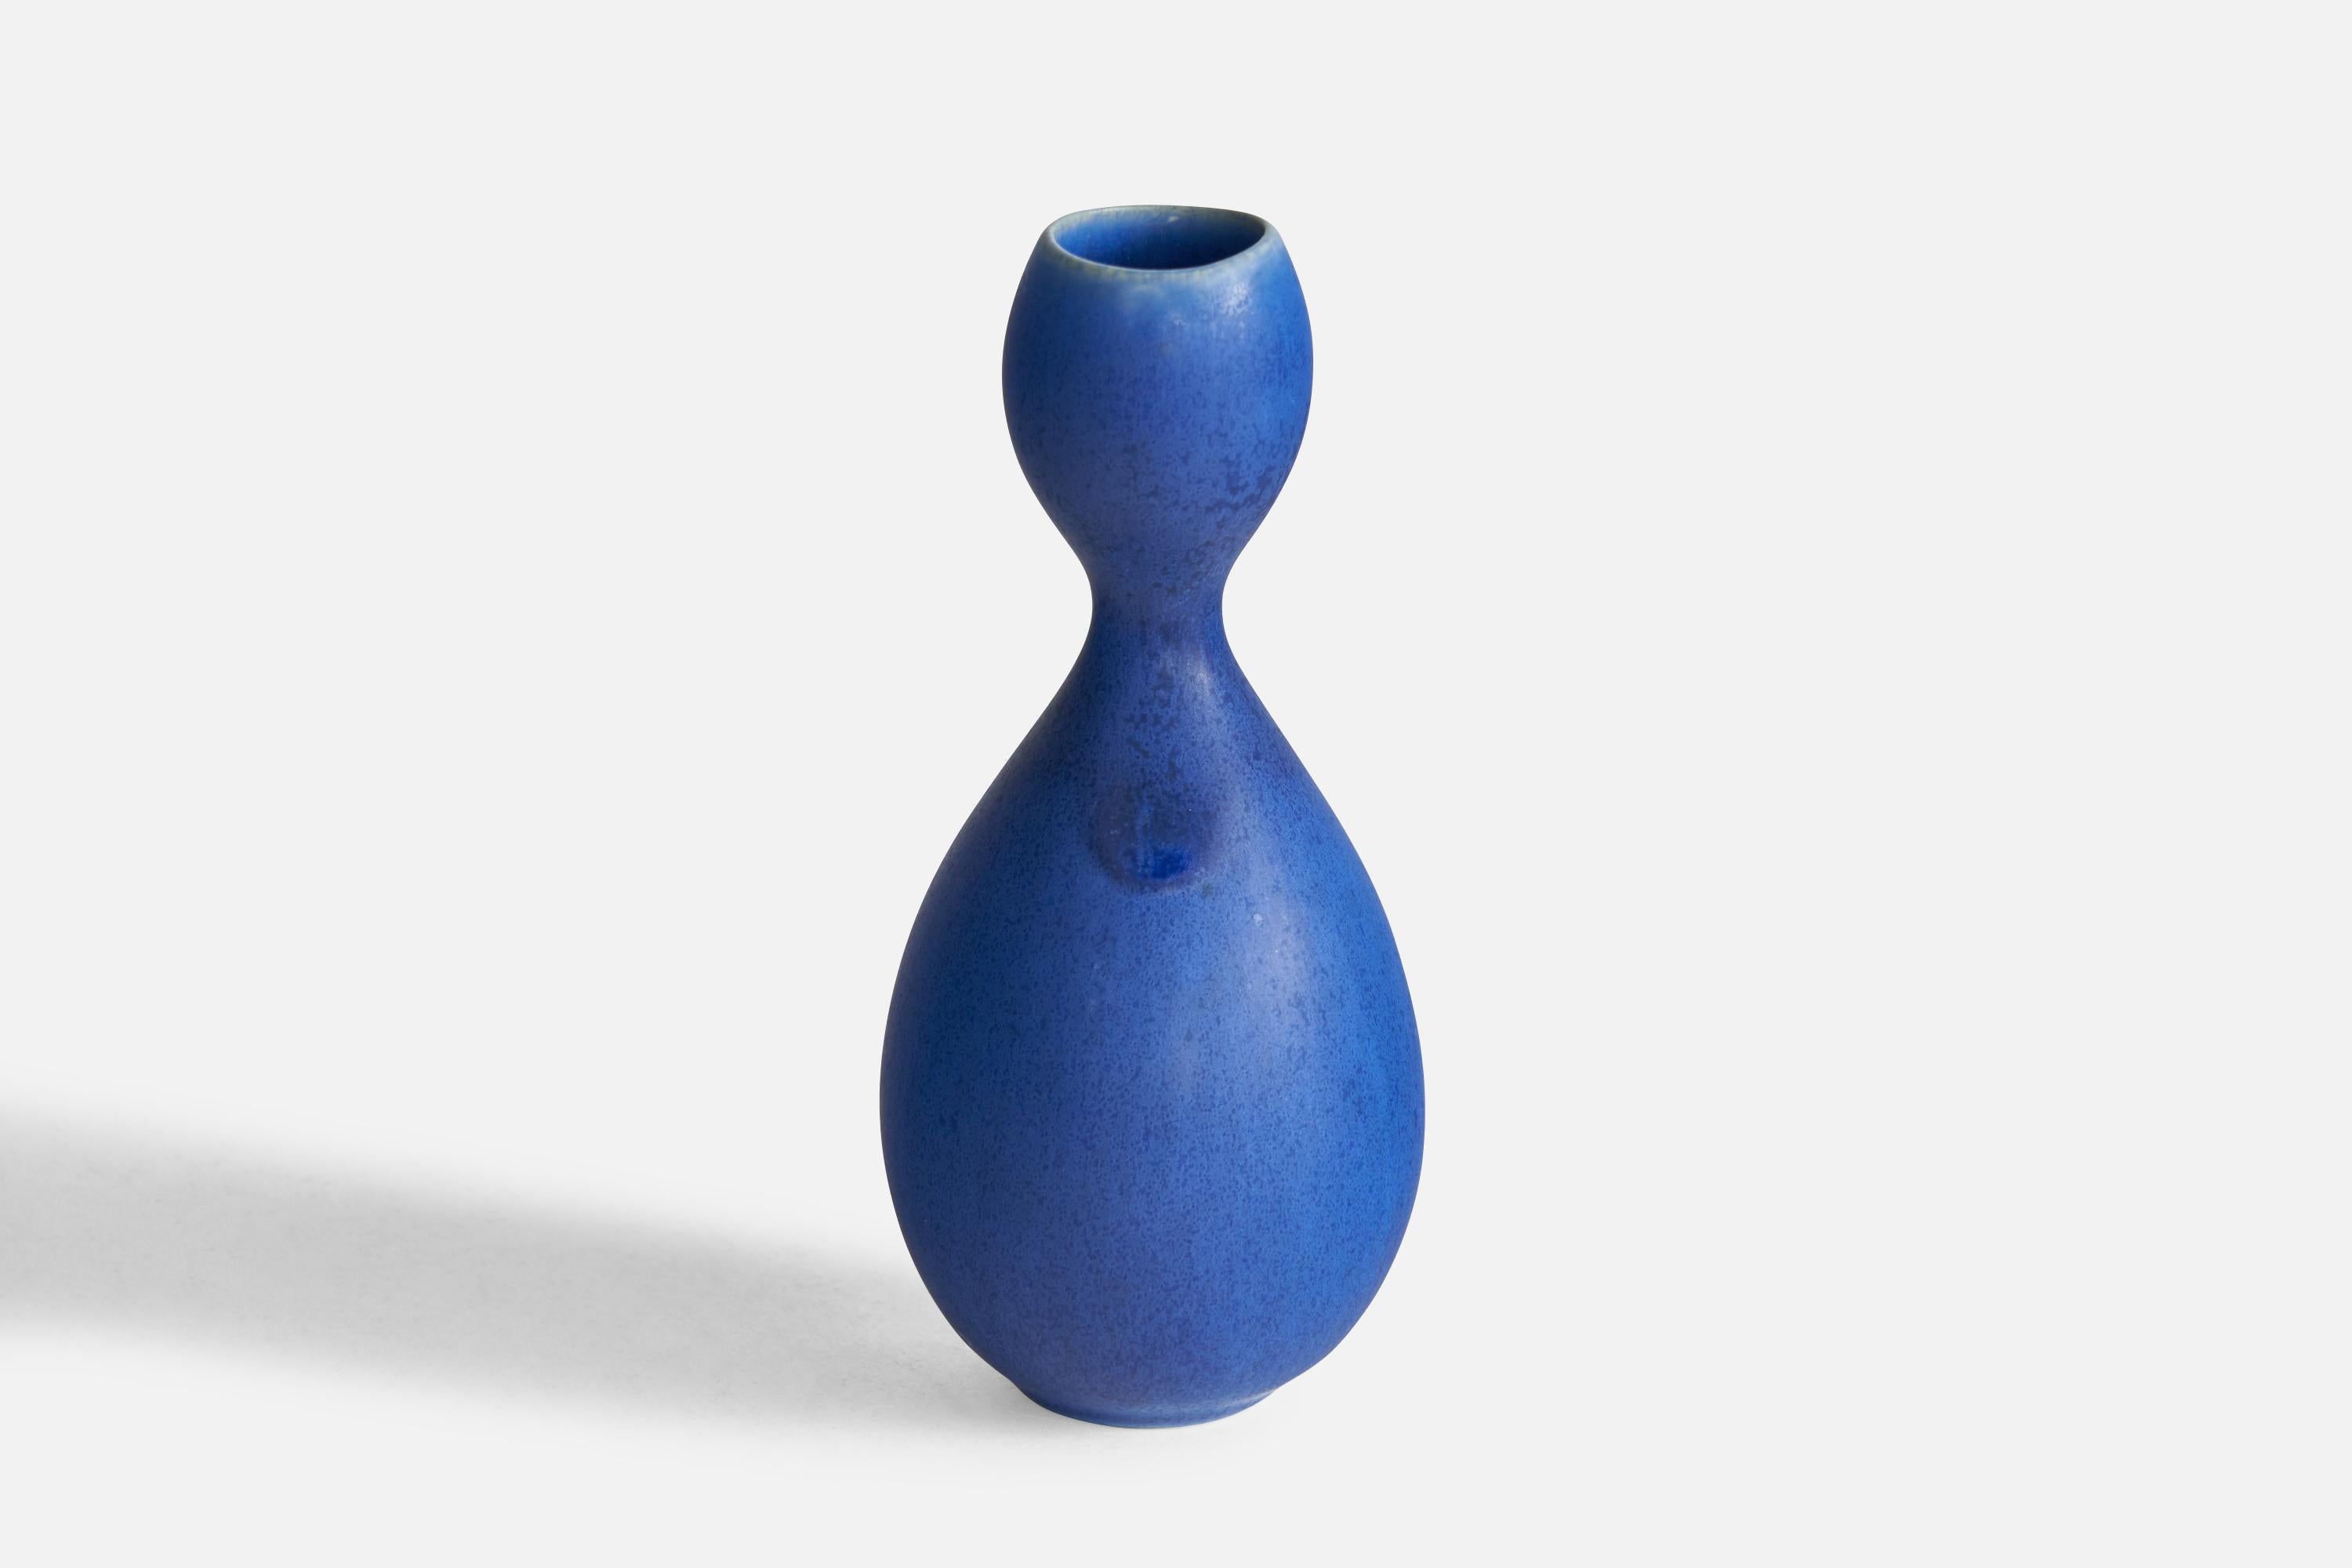 A small organic blue-glazed ceramic vase designed by Stig Lindberg and produced by Gustavsberg, Sweden, 1950s.